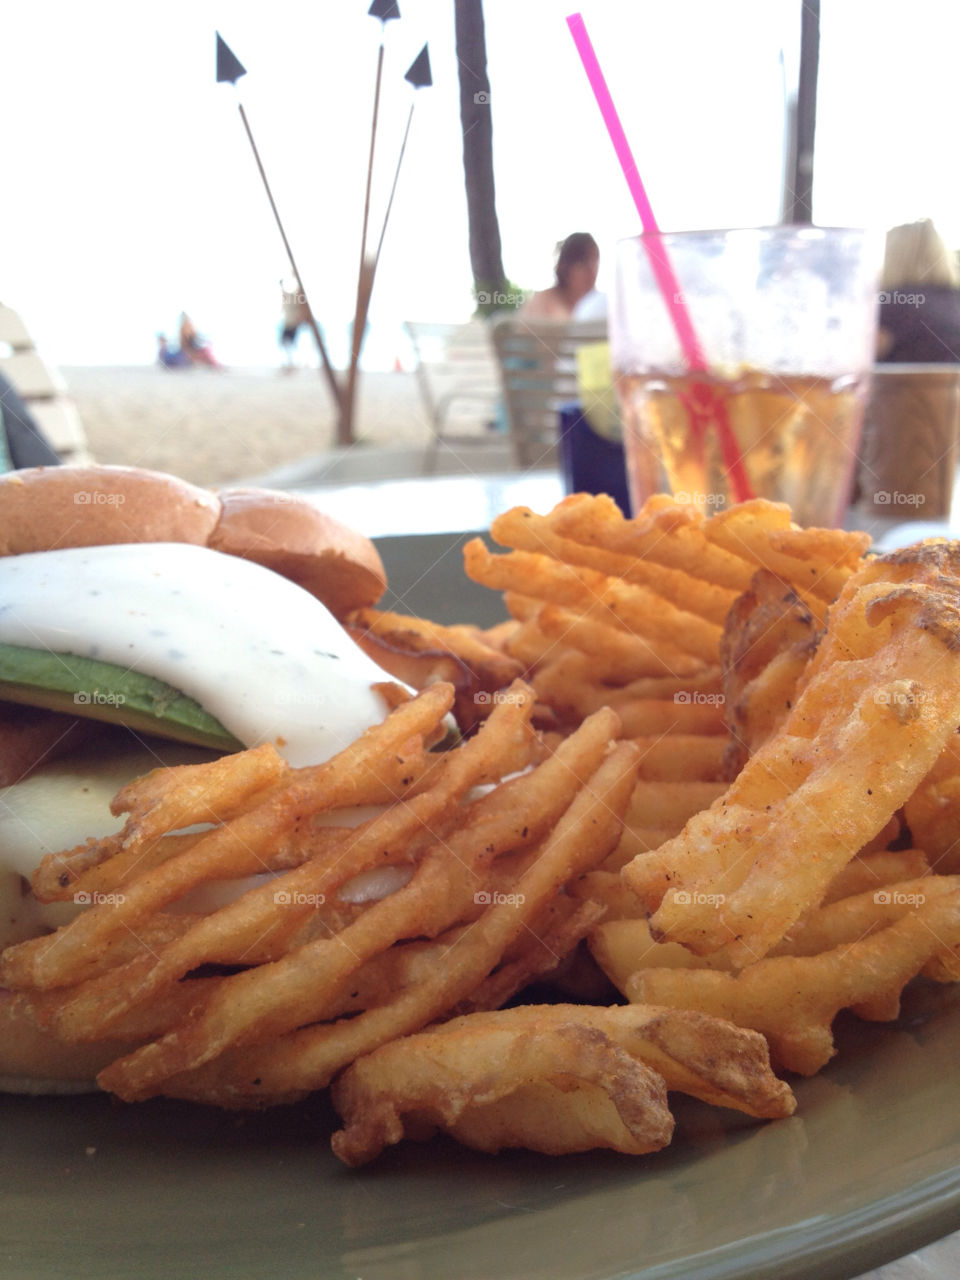 beach ocean food sandwich by patrickhardy